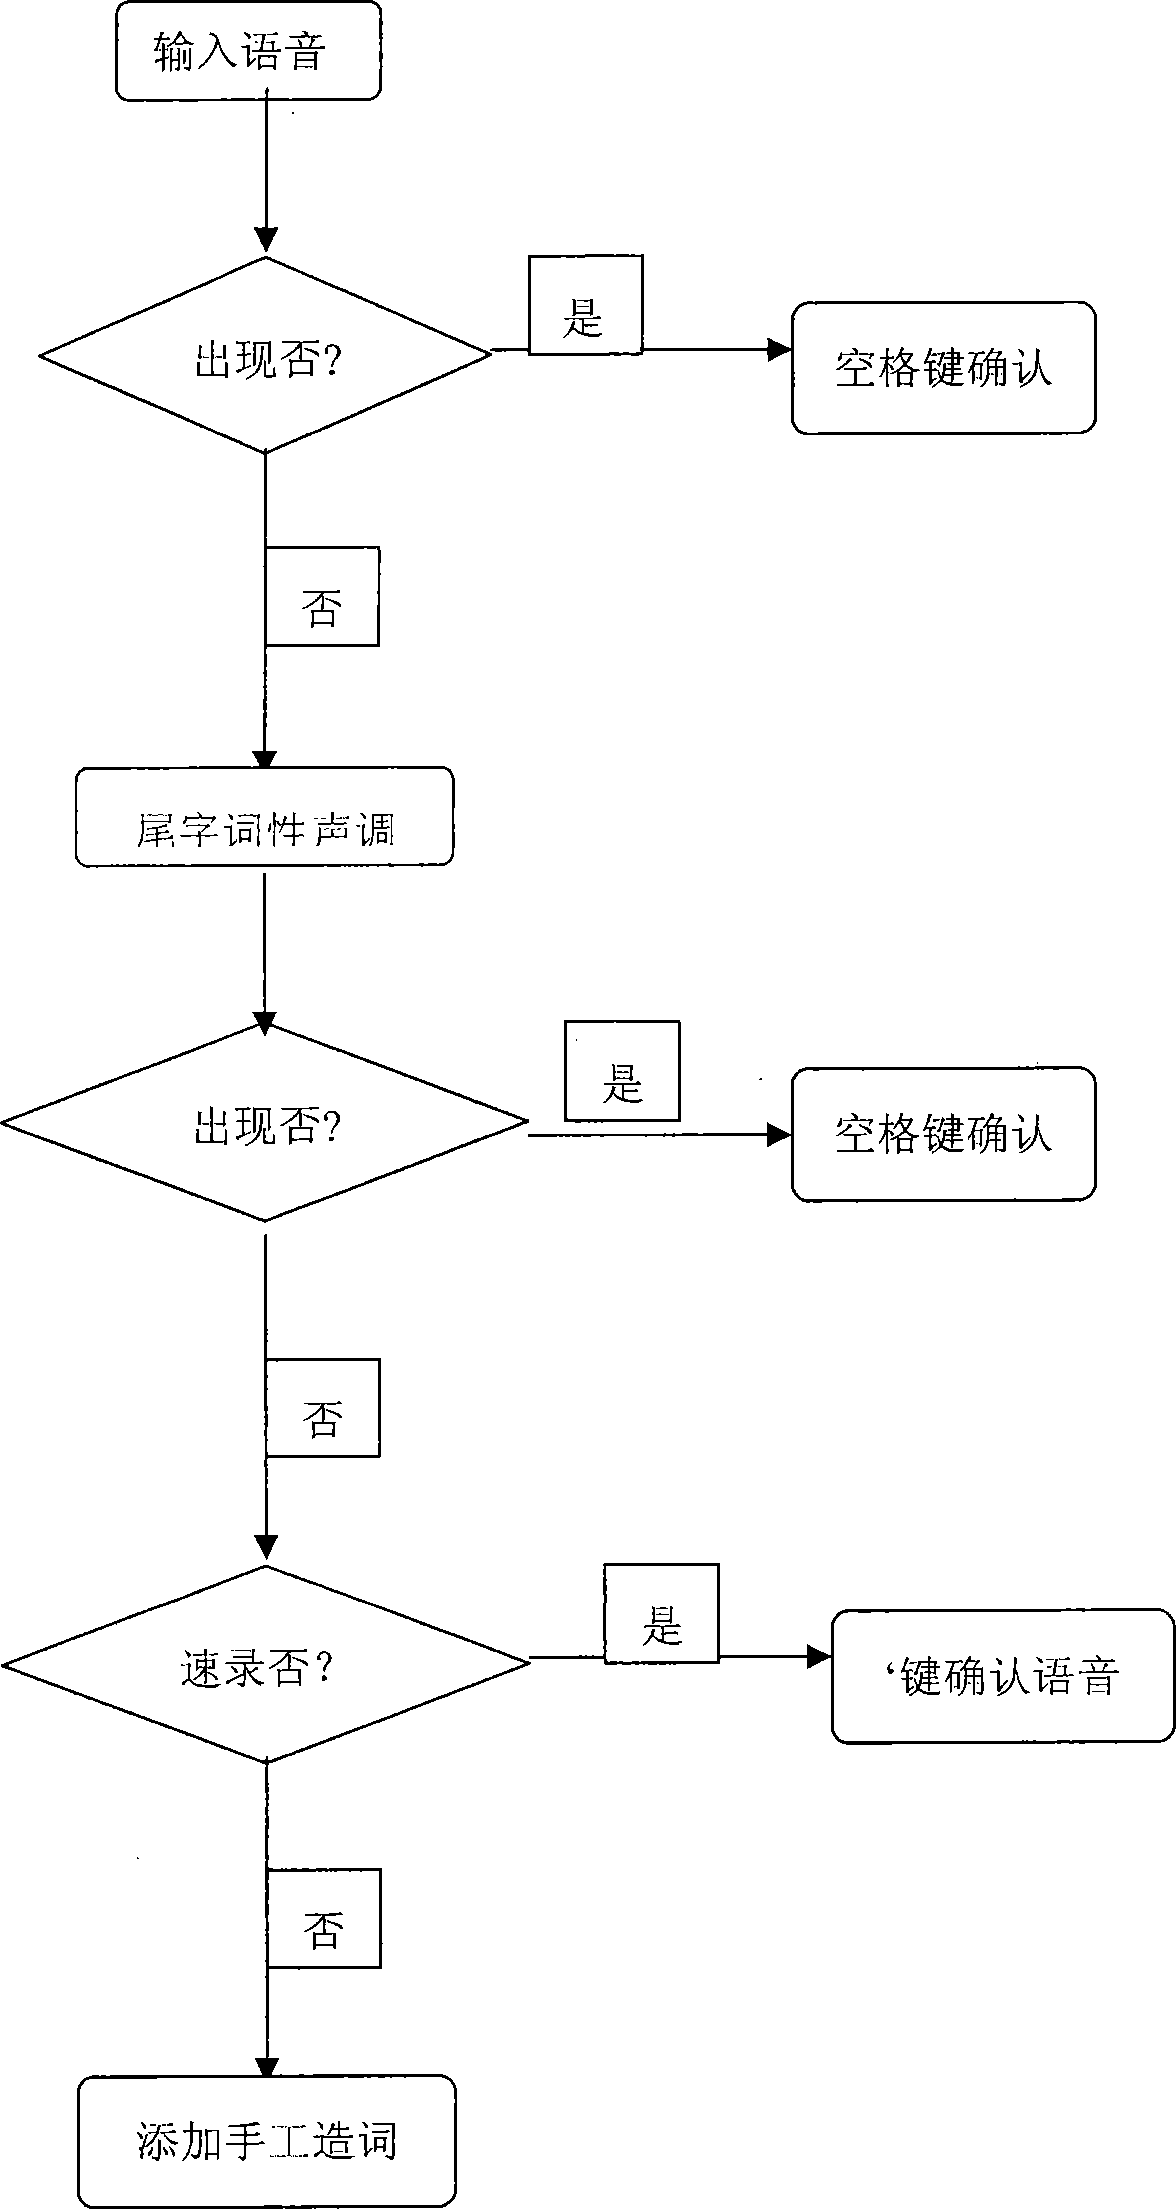 Computer Chinese language rapid recording method